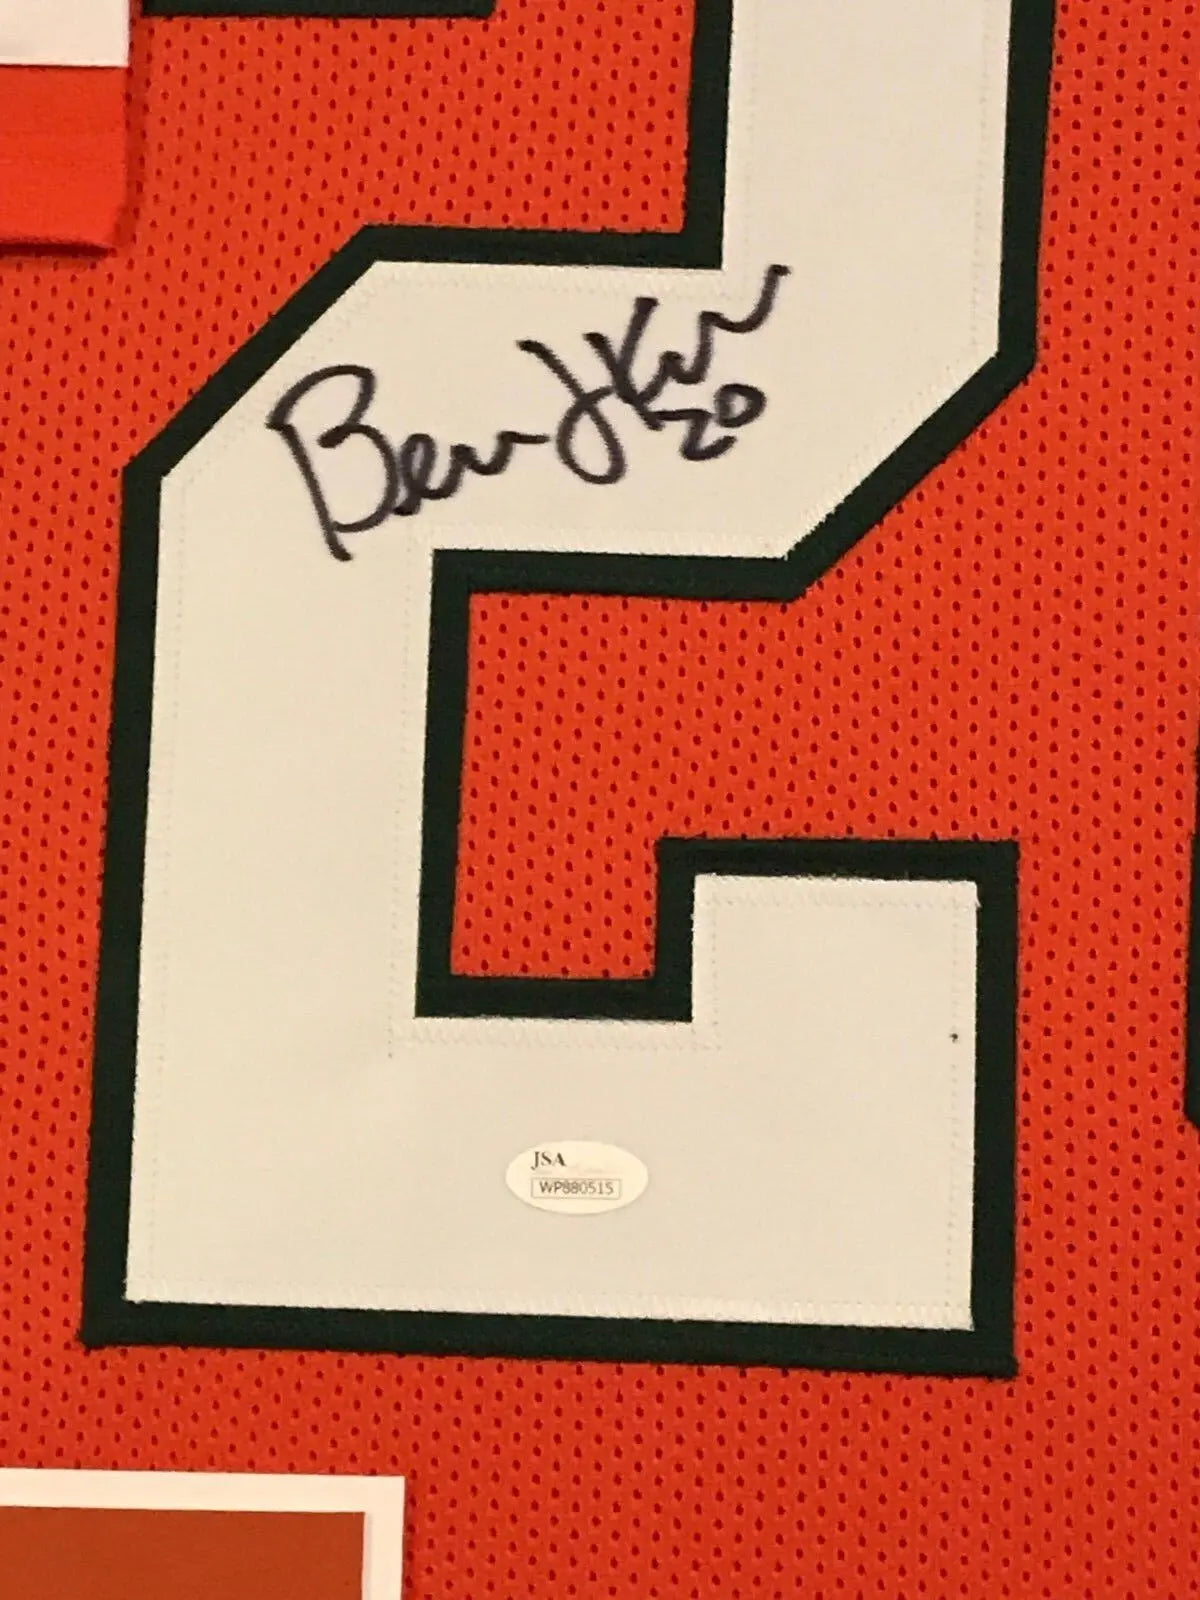 MVP Authentics Framed Miami Hurricanes Bernie Kosar Autographed Signed Jersey Jsa Coa 449.99 sports jersey framing , jersey framing